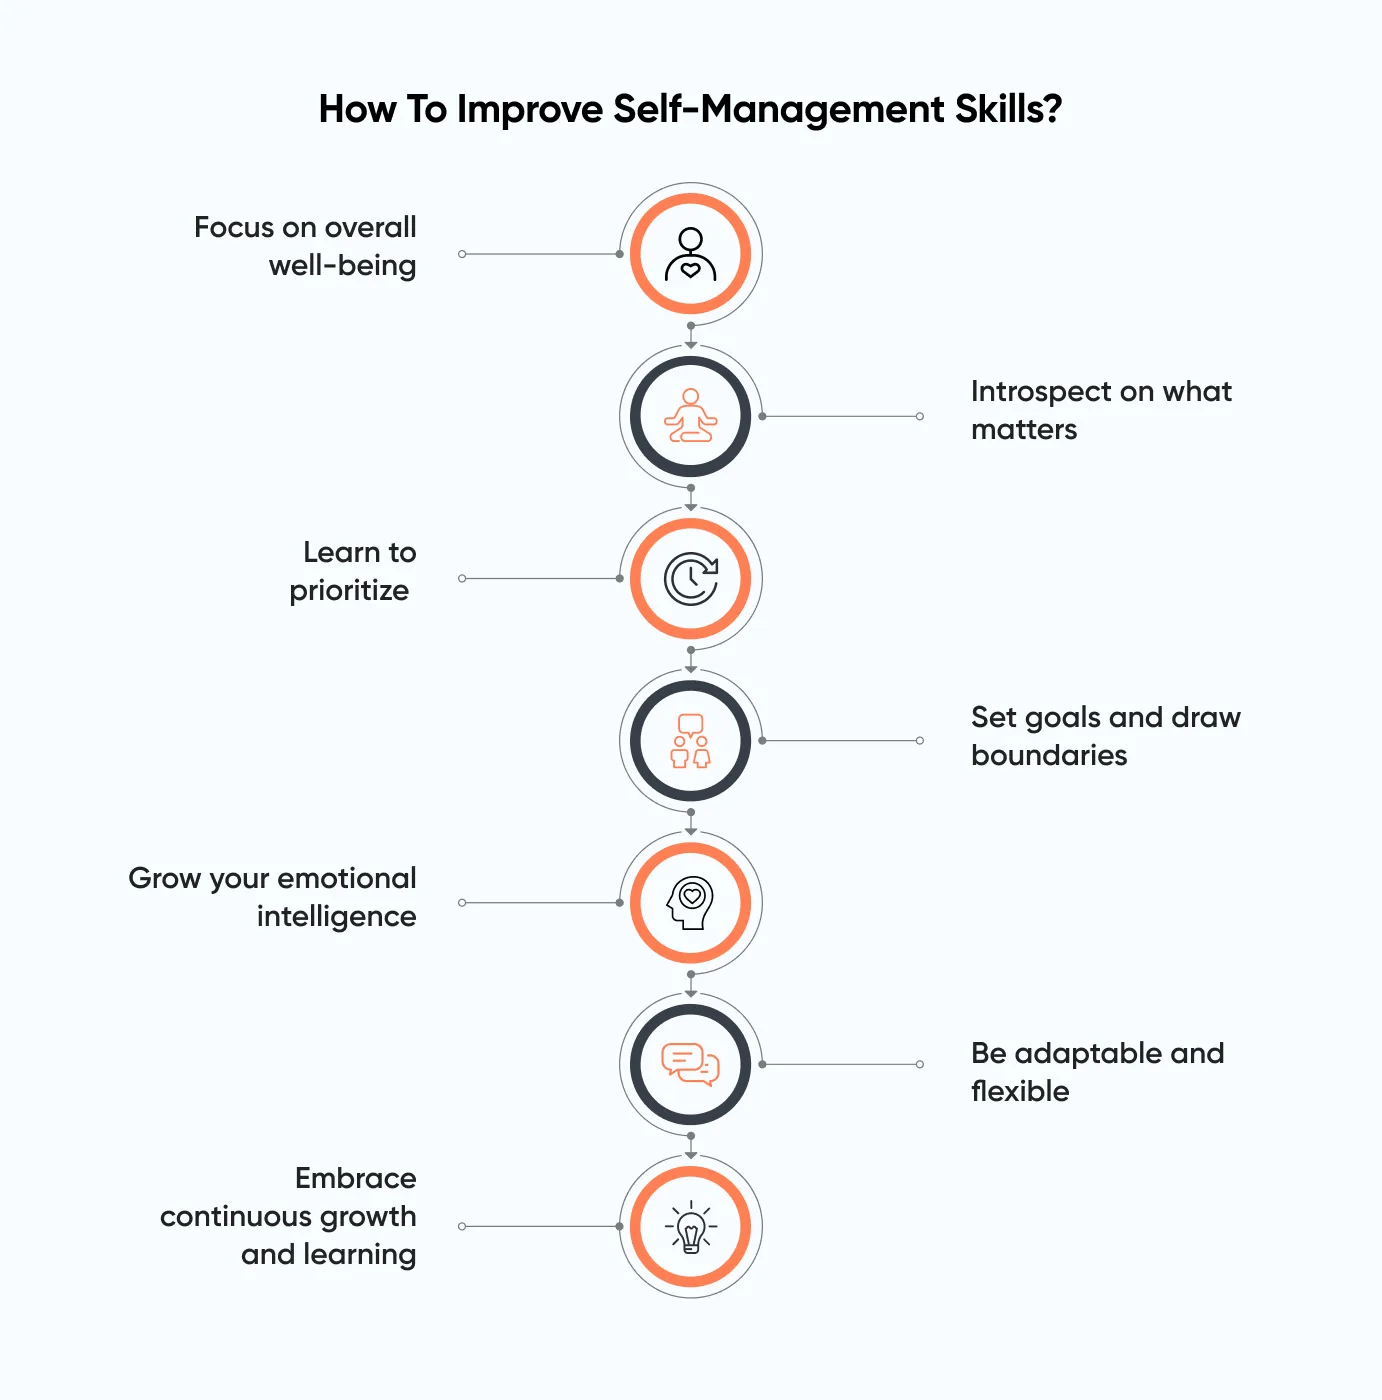 How to improve self-management skills